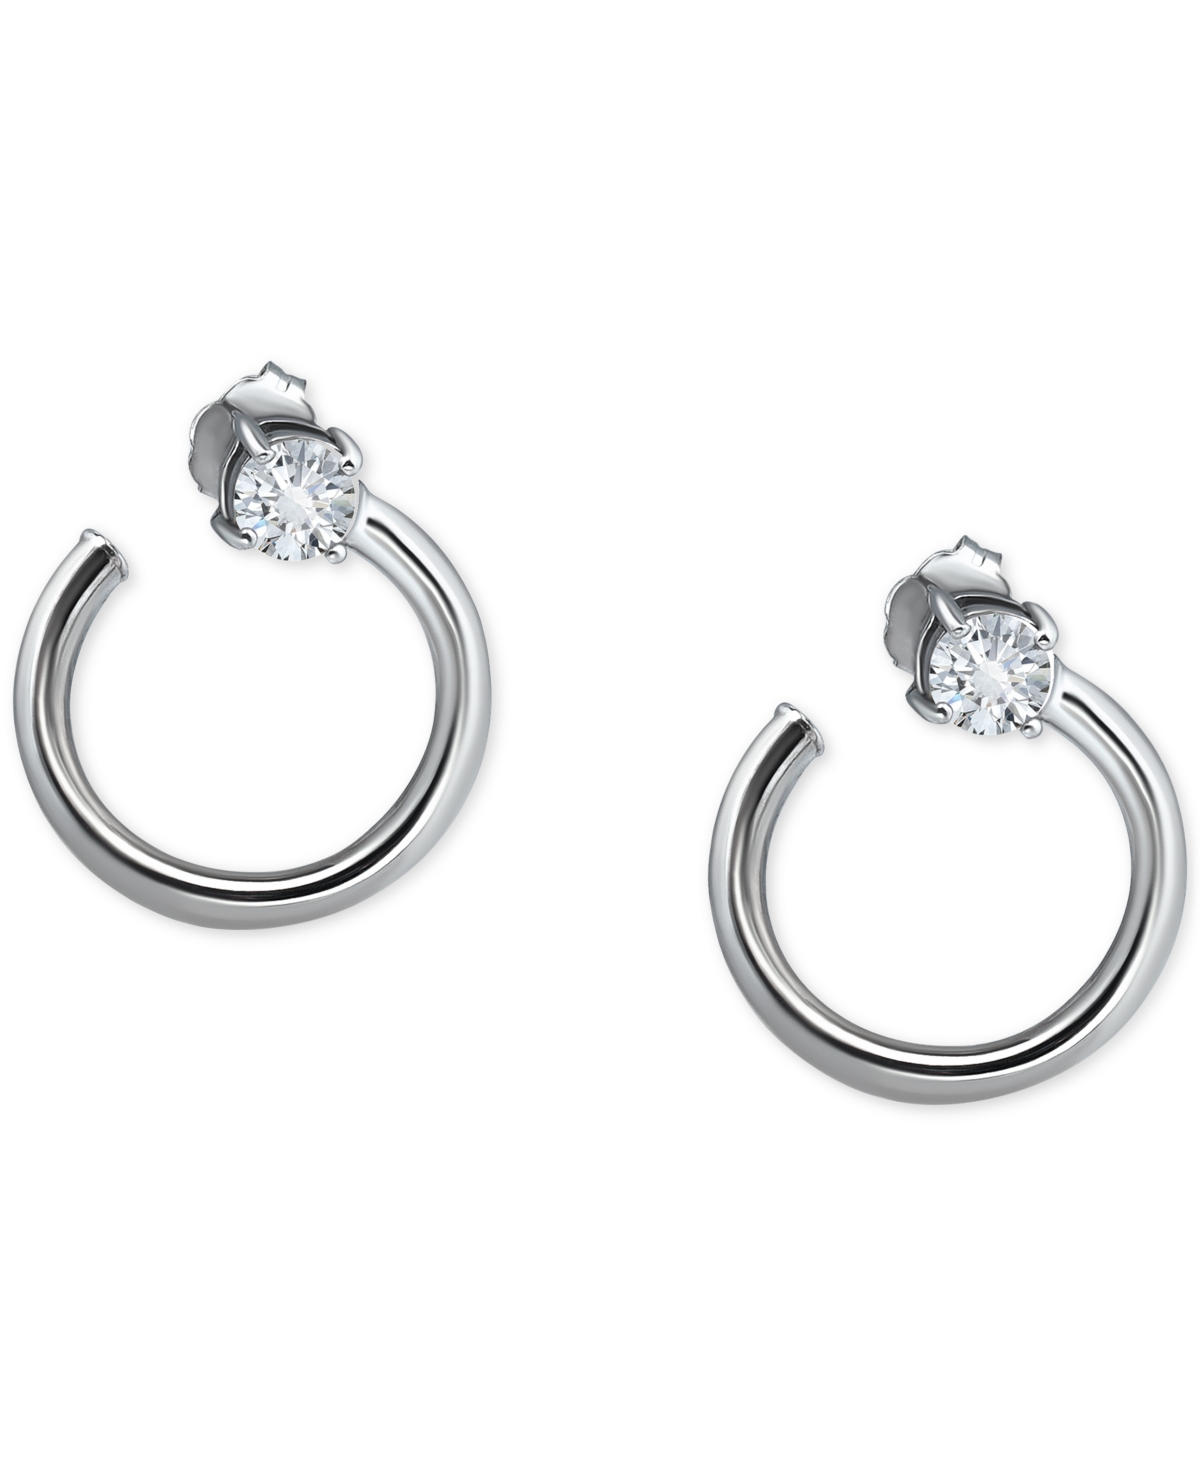 Giani Bernini Cubic Zirconia Spiral Hoop Earrings, Created For Macy's In Silver